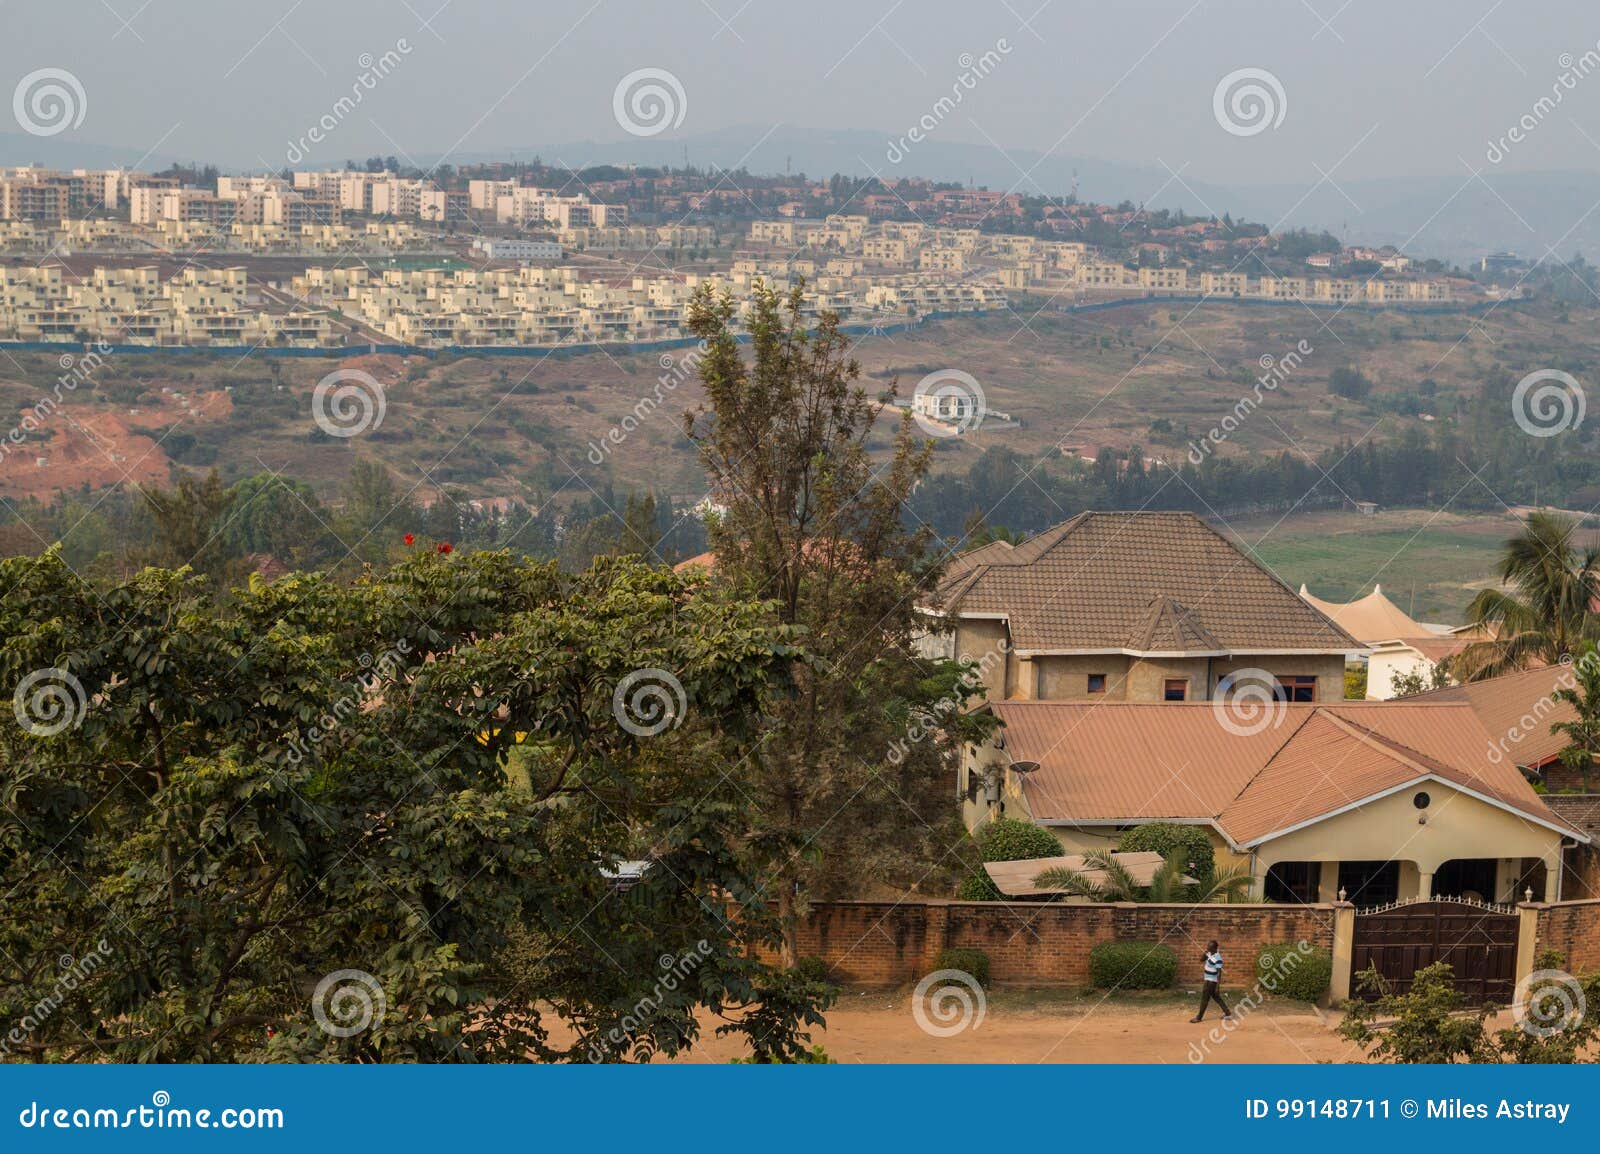 Residential Neighborhoods In Kigali, Rwanda Editorial Photo - Image of